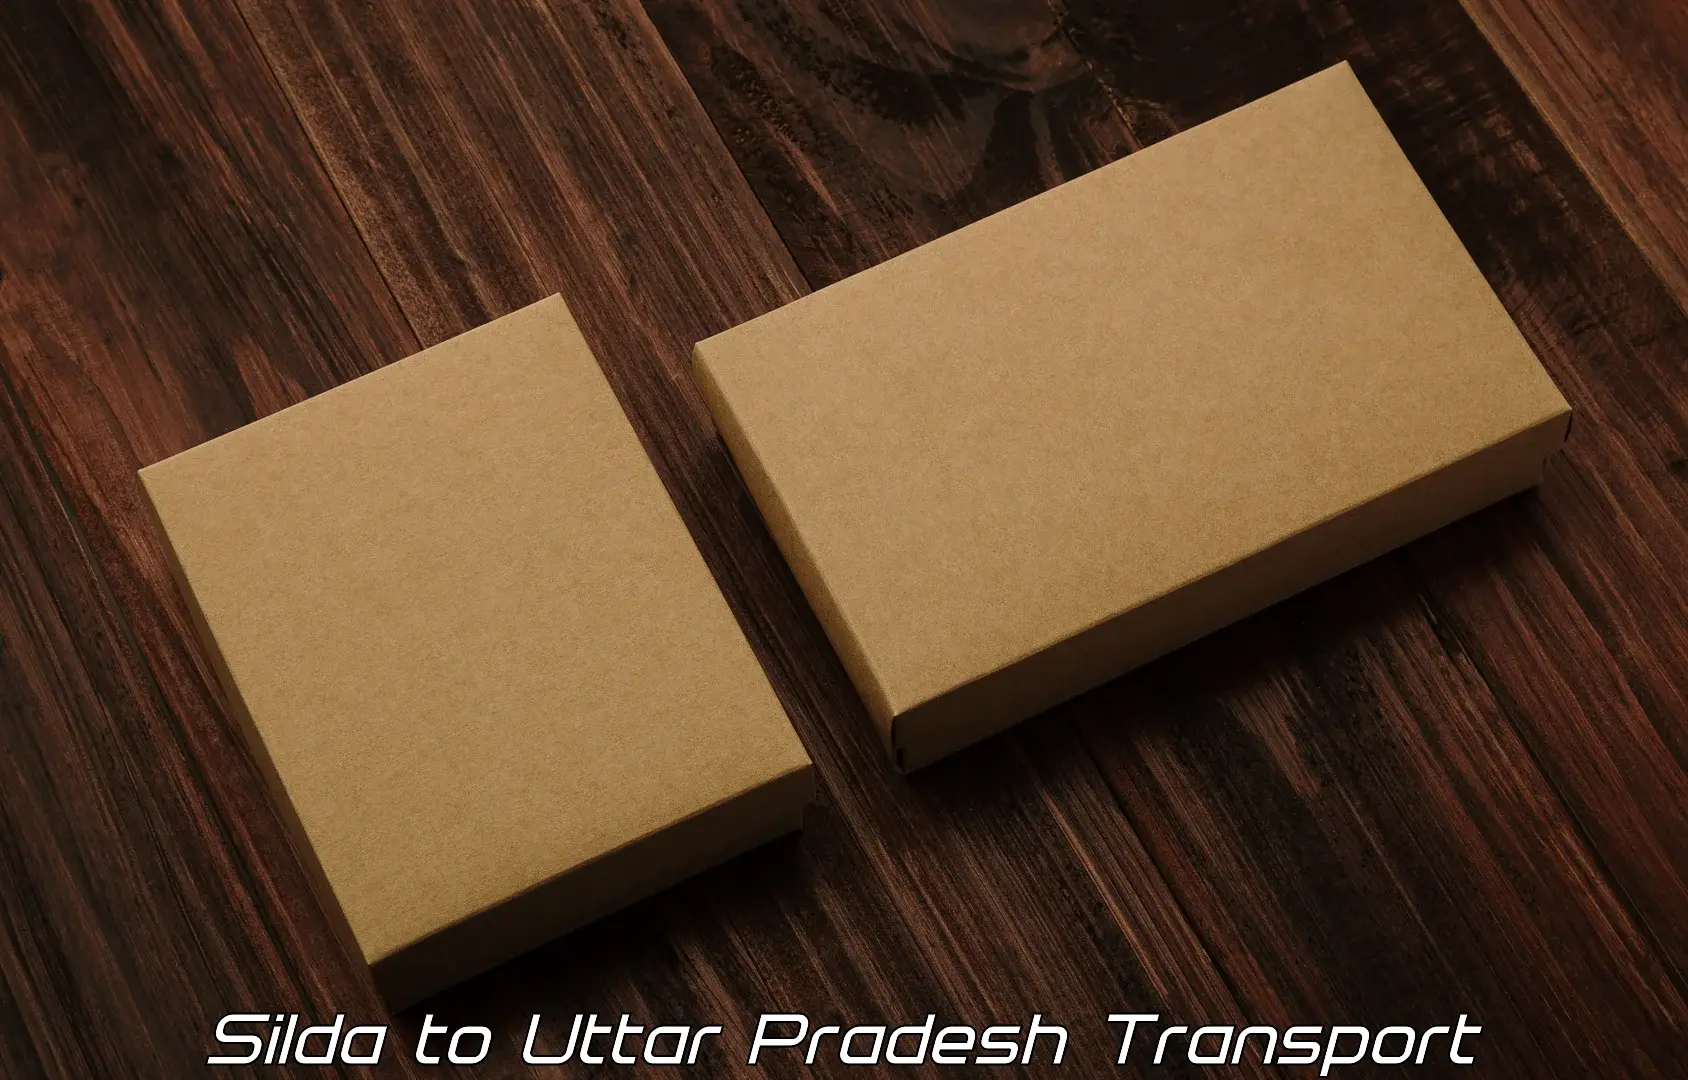 Transport in sharing Silda to Kulpahar